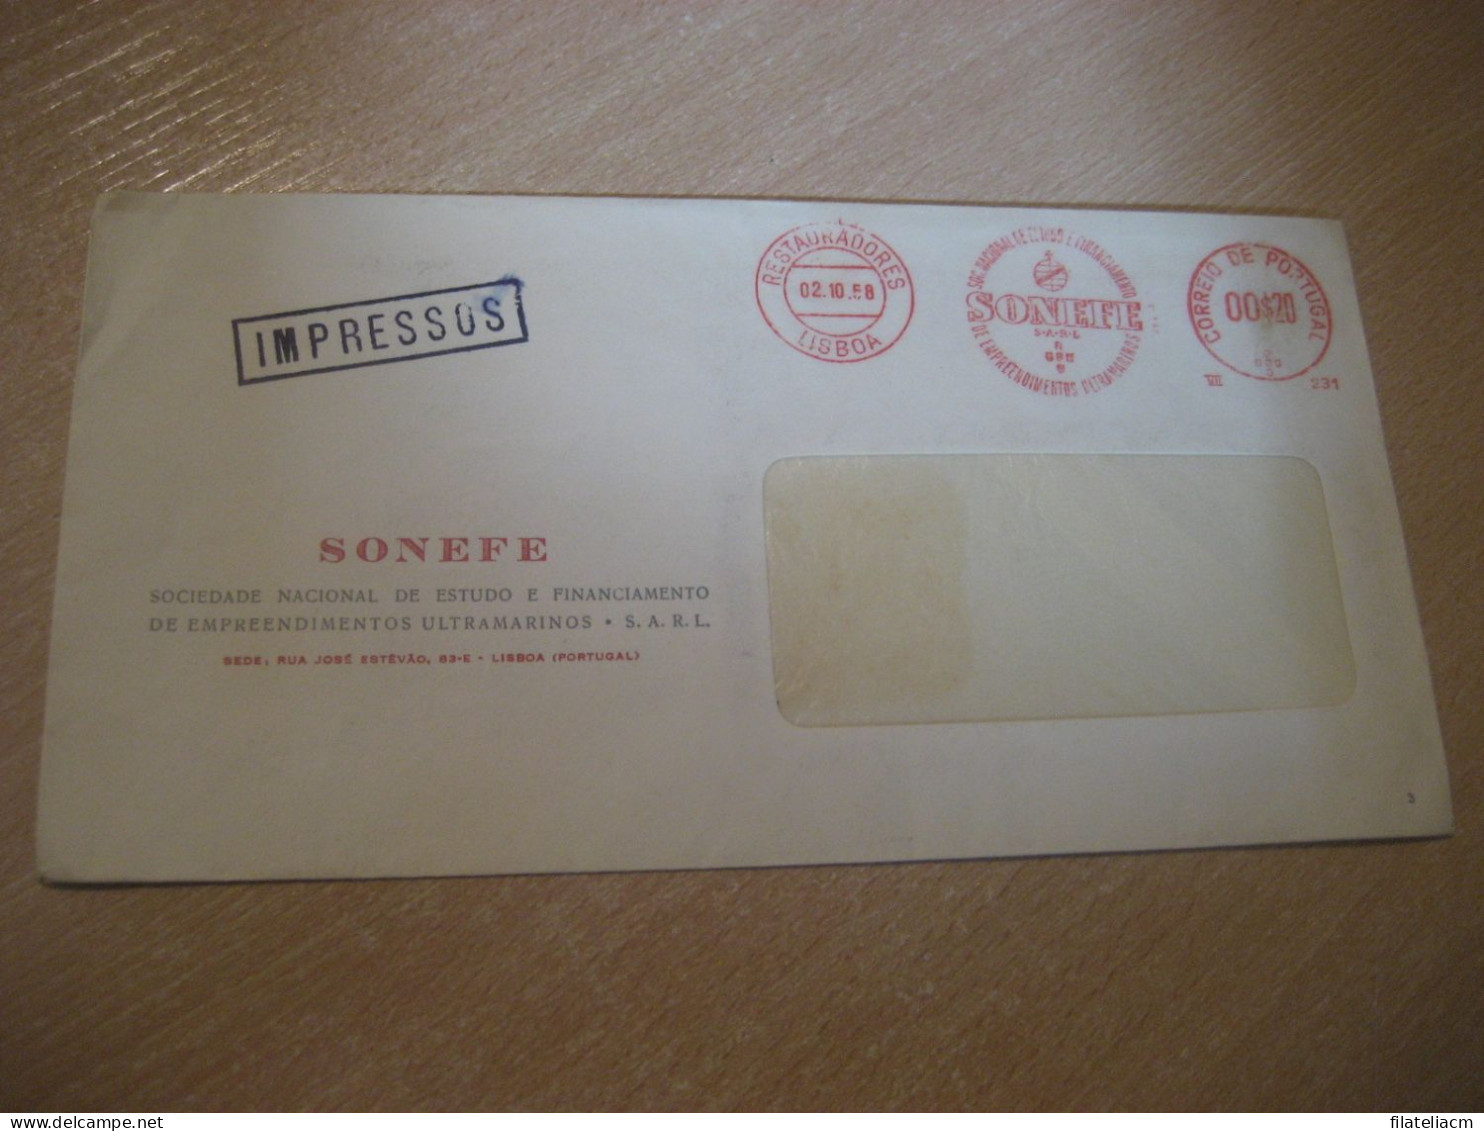 LISBOA 1958 Sonefe Financiamento Ultramarinos Meter Mail Cancel Cover PORTUGAL - Lettres & Documents